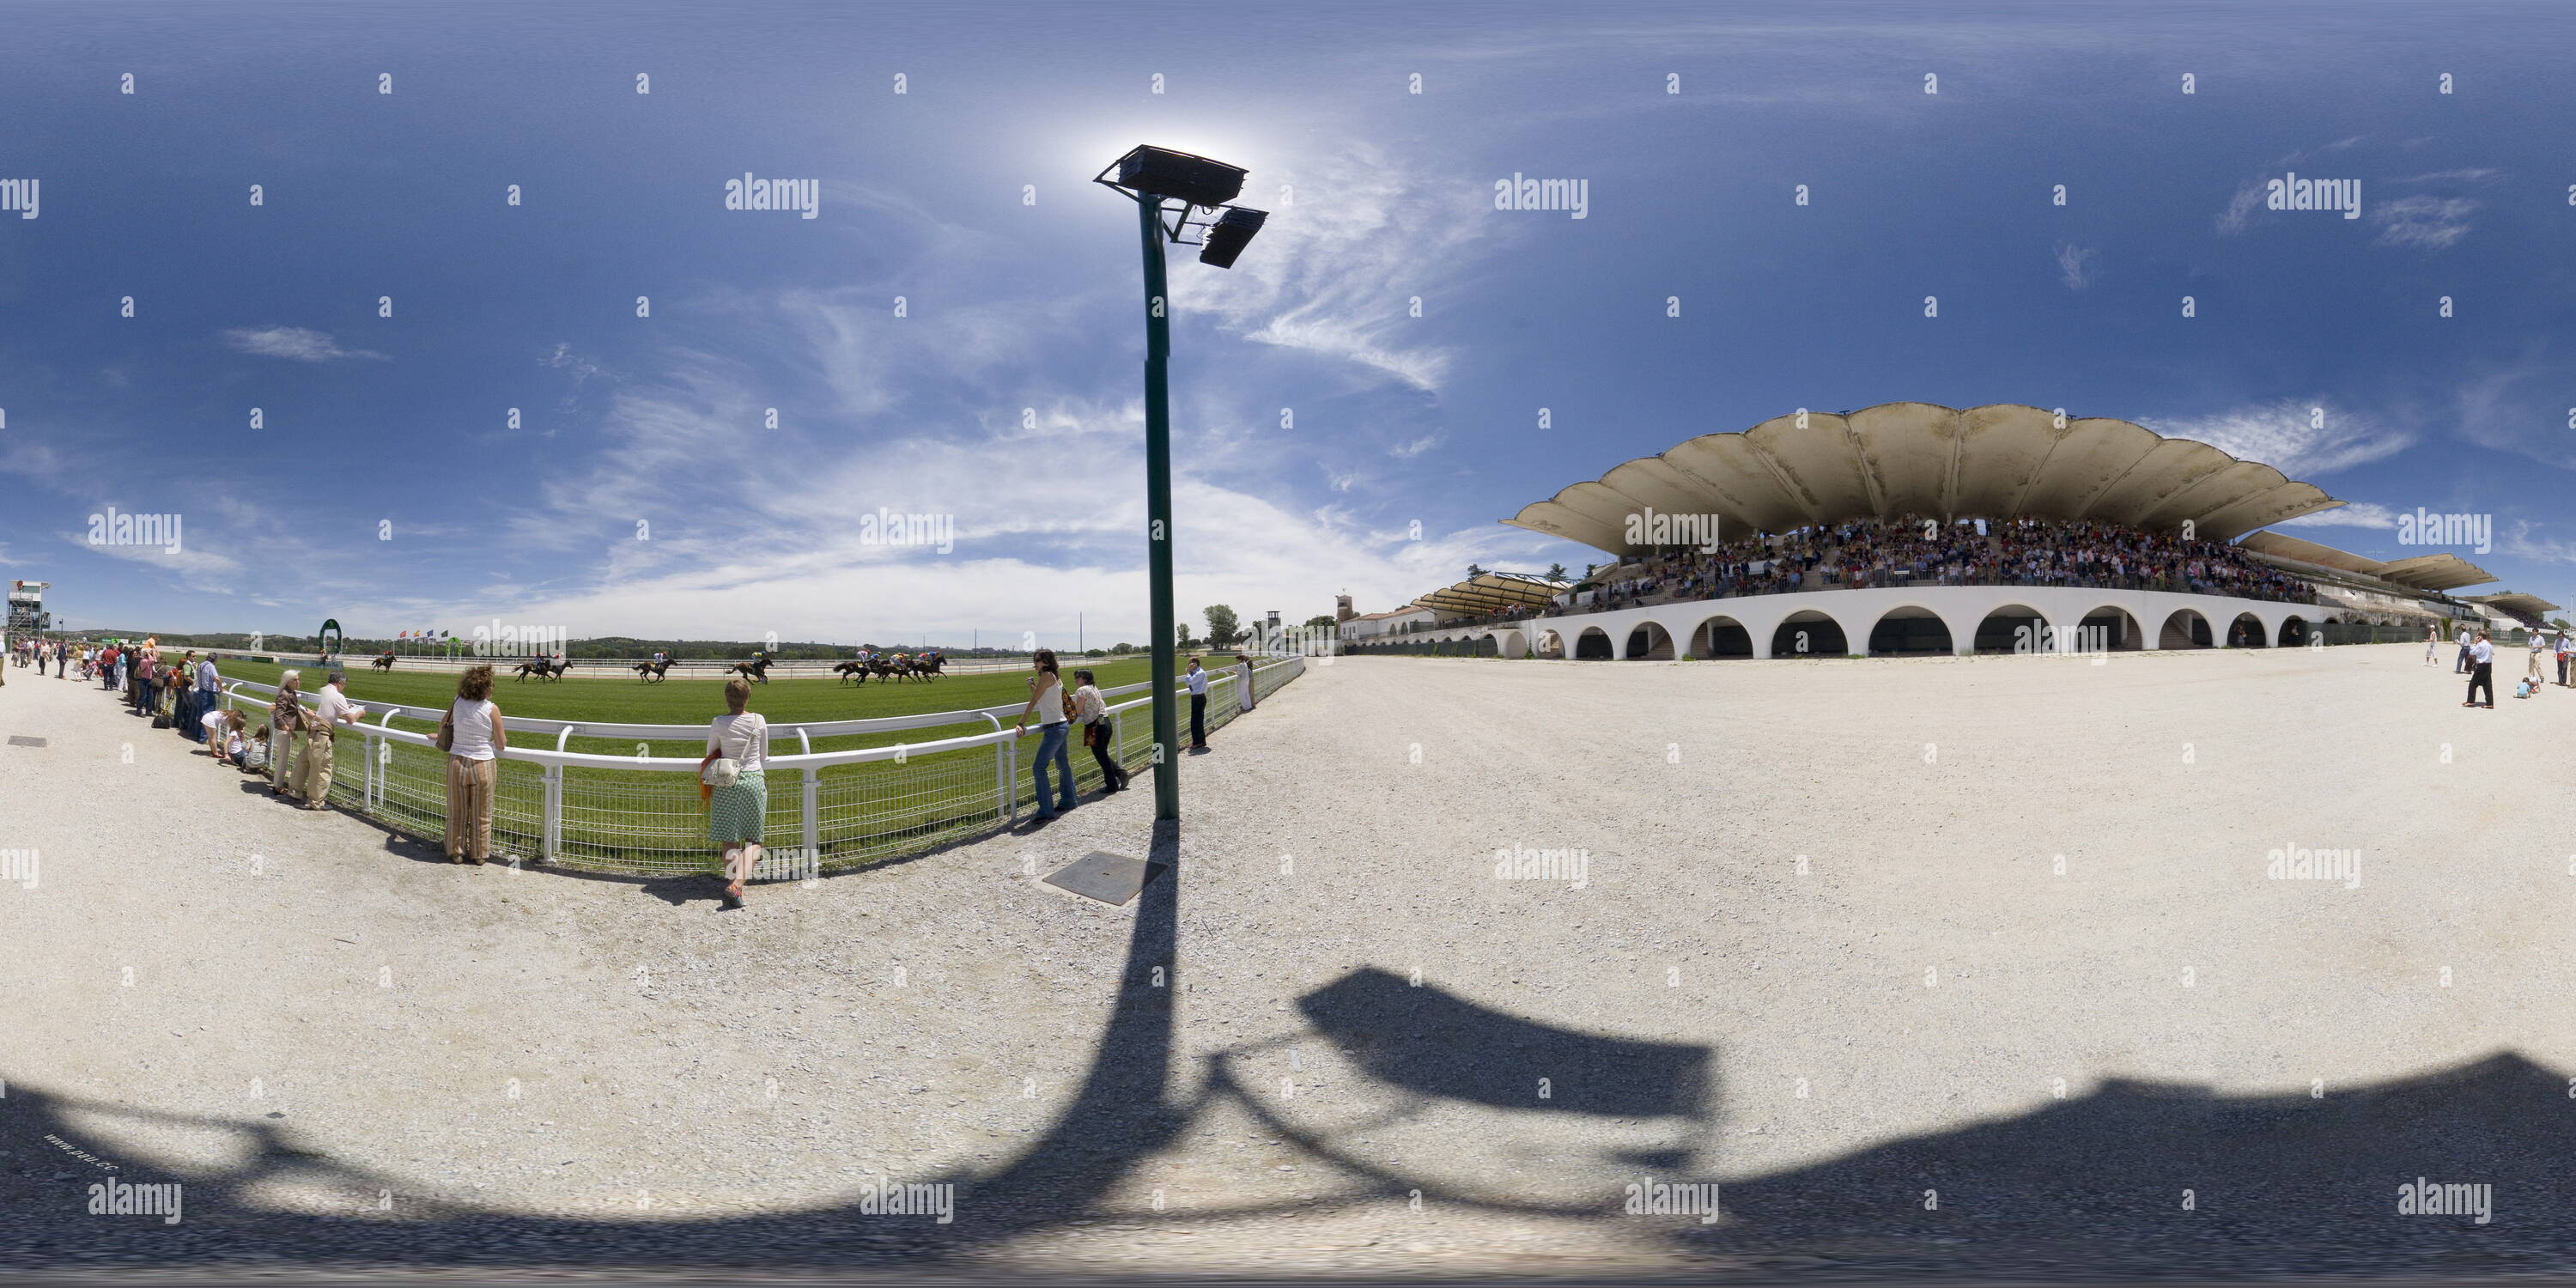 360 degree panoramic view of Horse racing photo finish